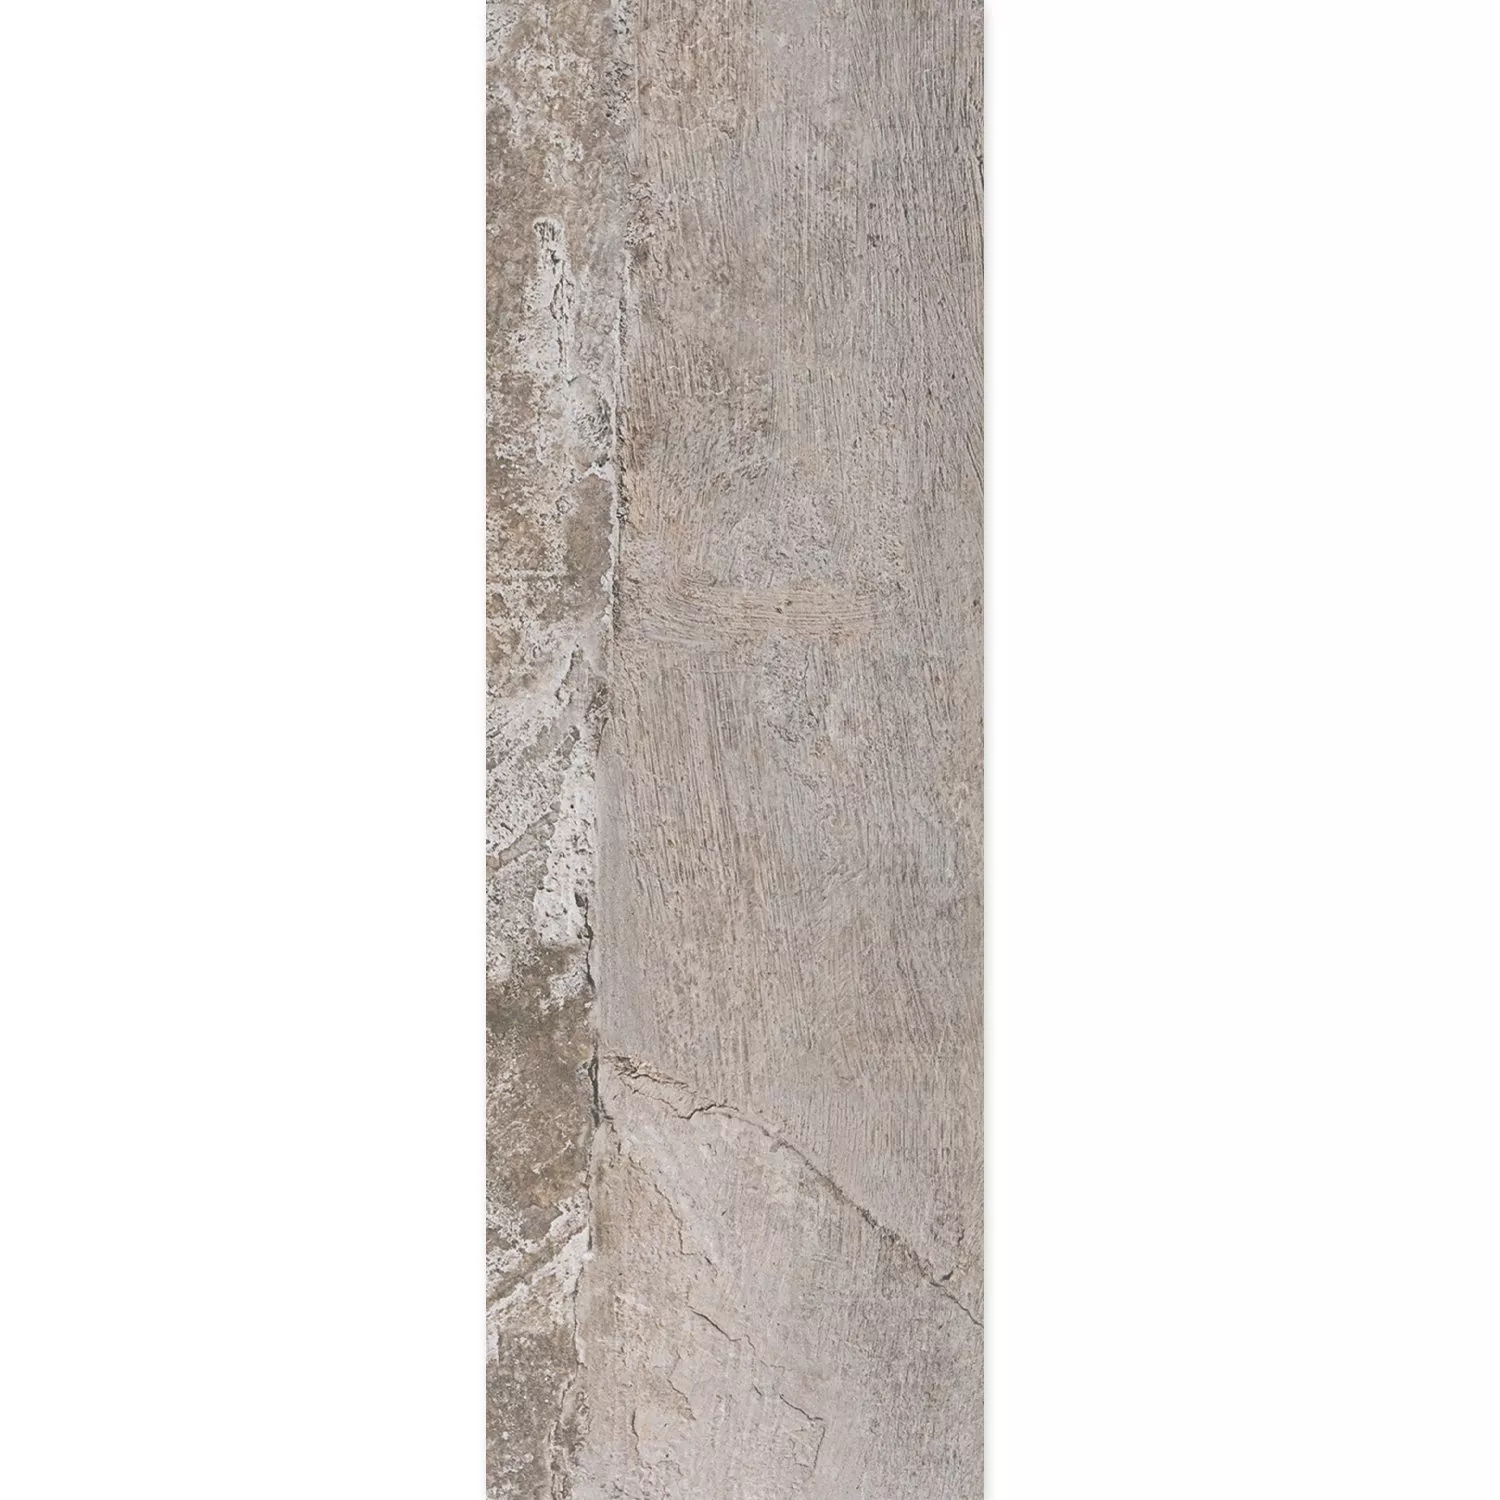 Muestra Pavimento Aspecto De Piedra Polaris R10 Gris 30x120cm